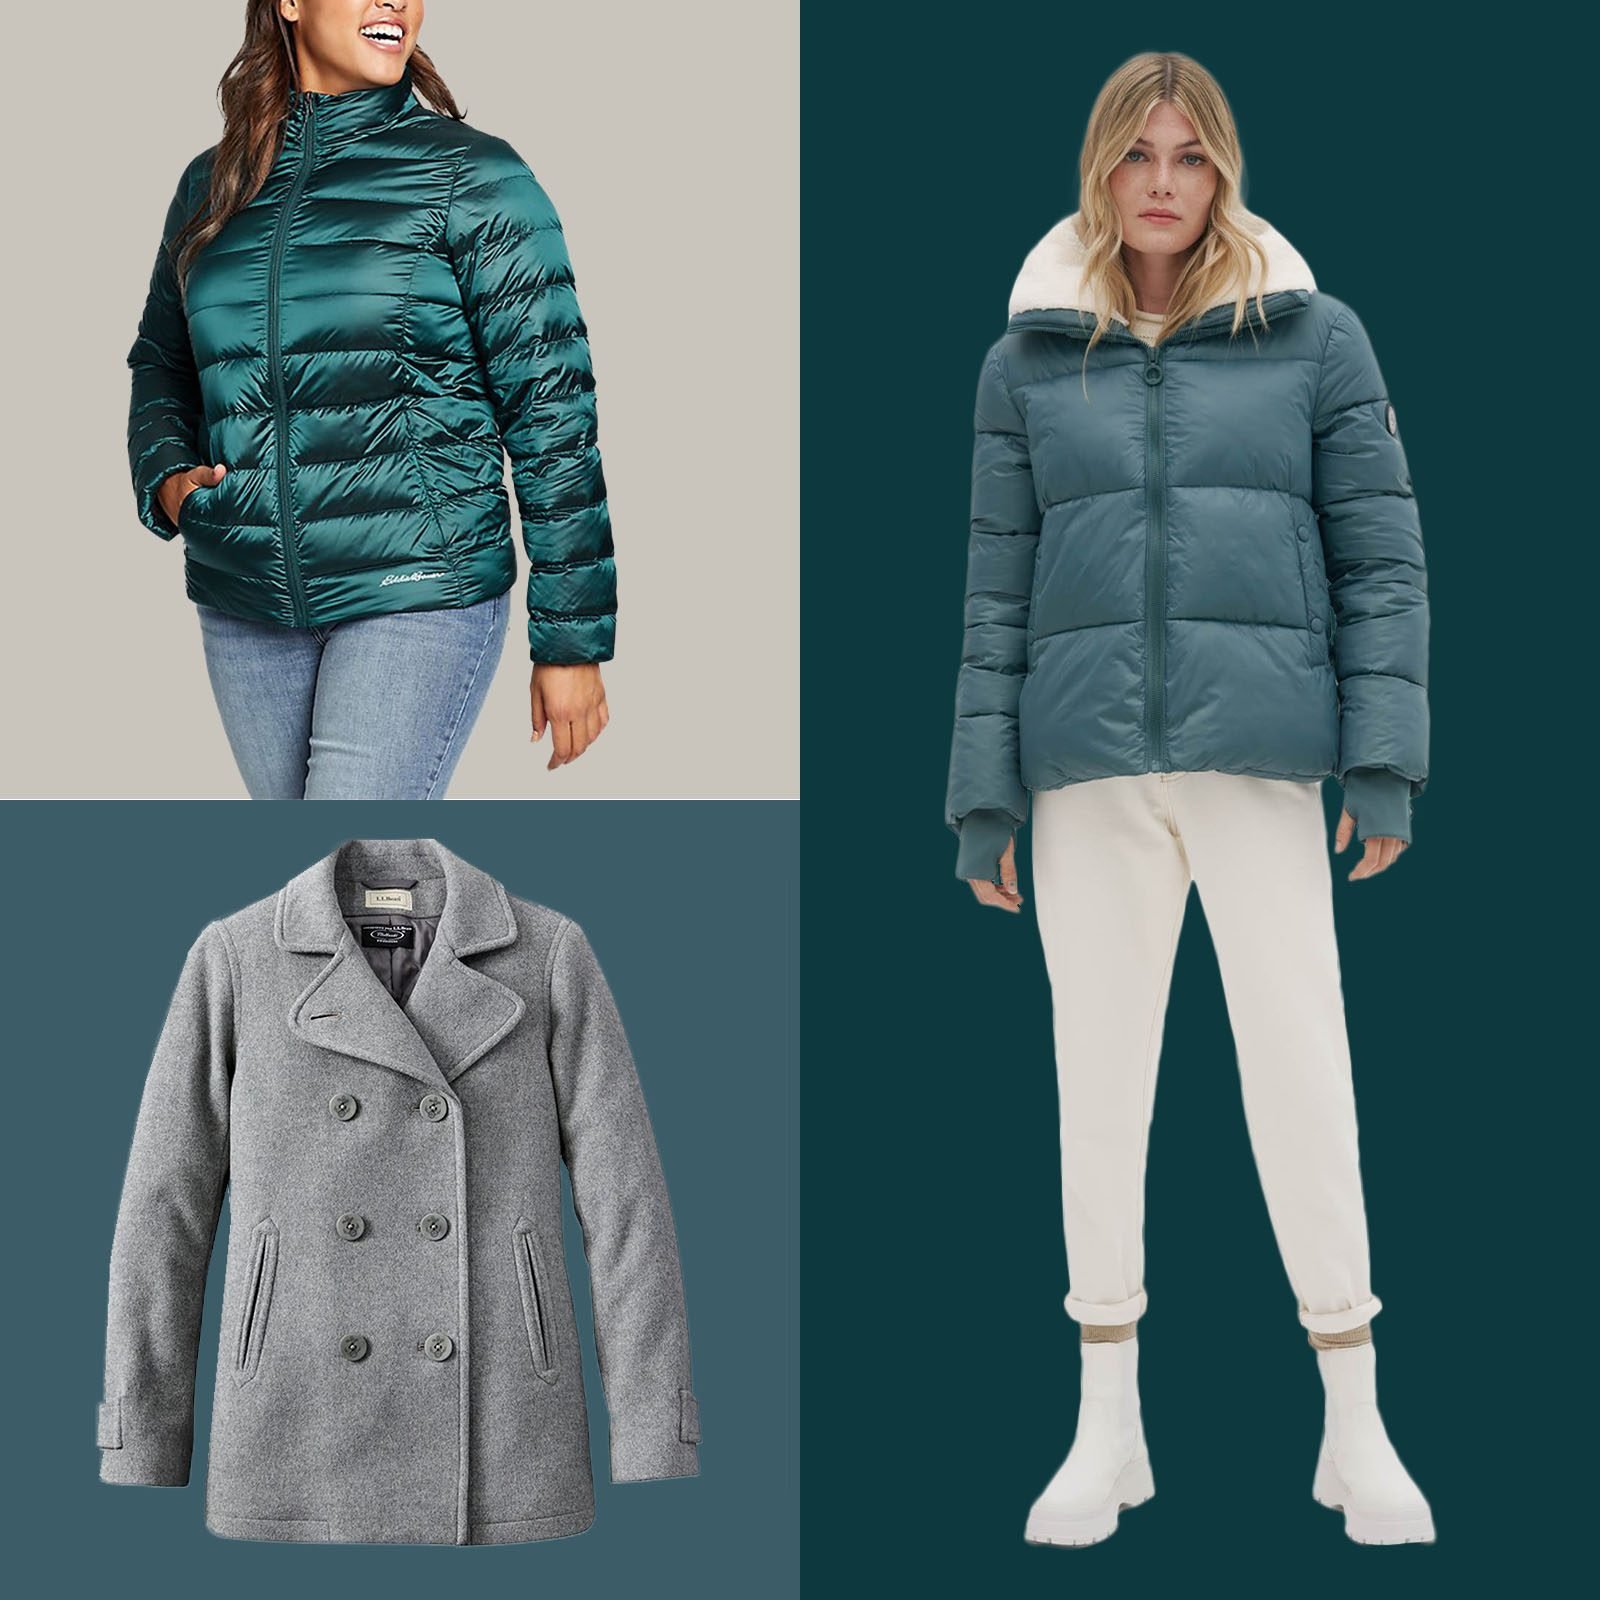 25 Warmest Winter Coats For Women 2021, Winter Coats